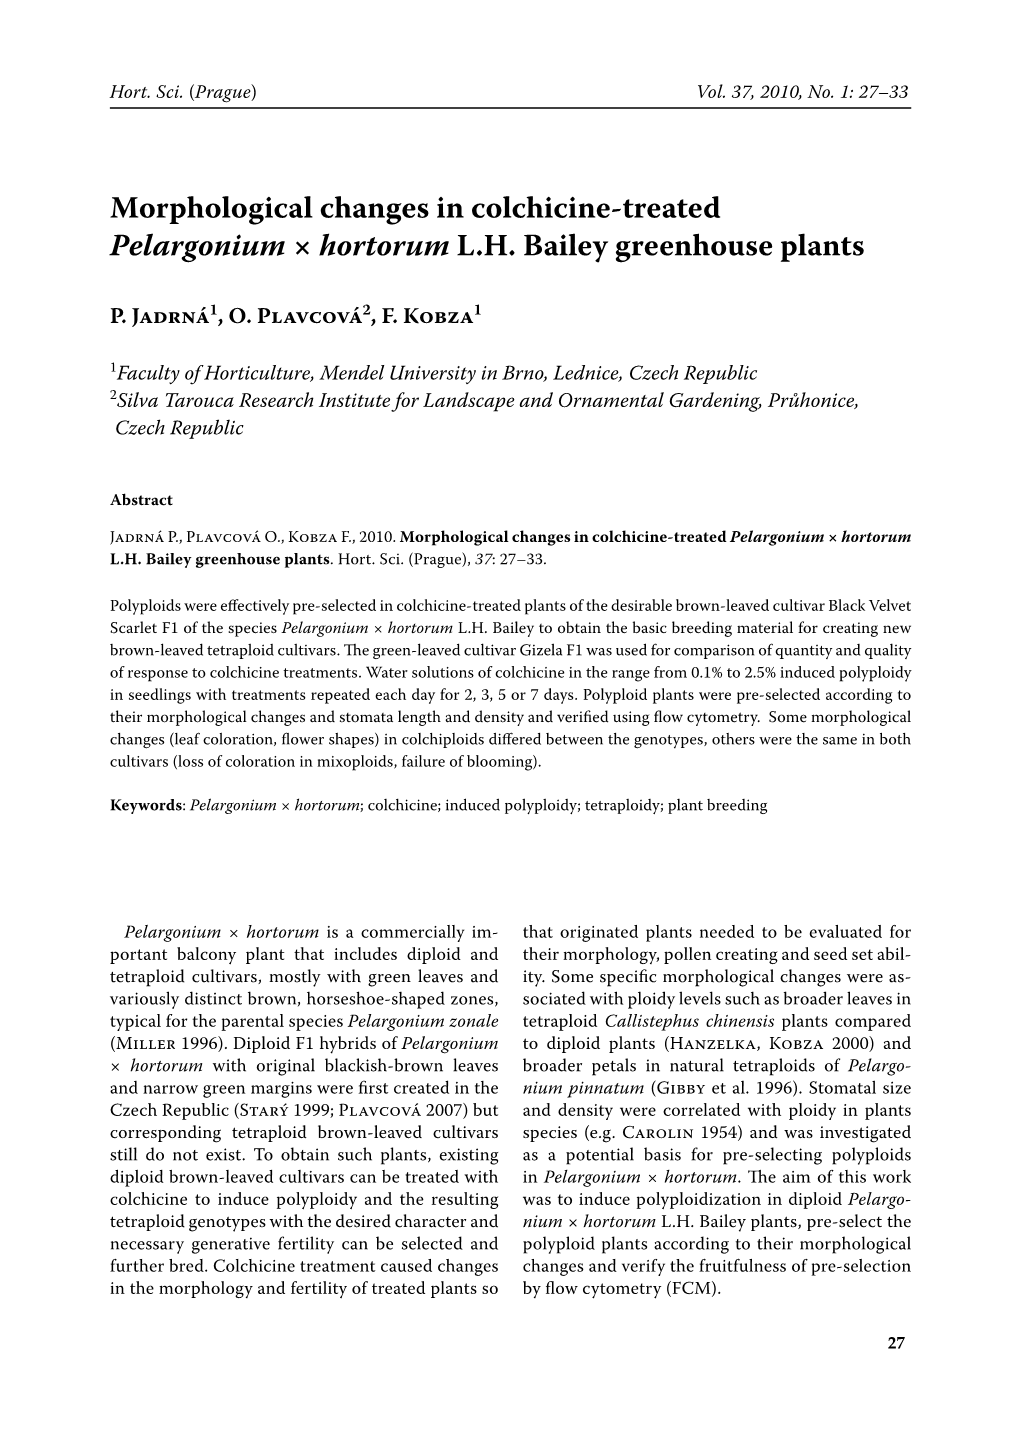 Morphological Changes in Colchicine-Treated Pelargonium × Hortorum L.H. Bailey Greenhouse Plants